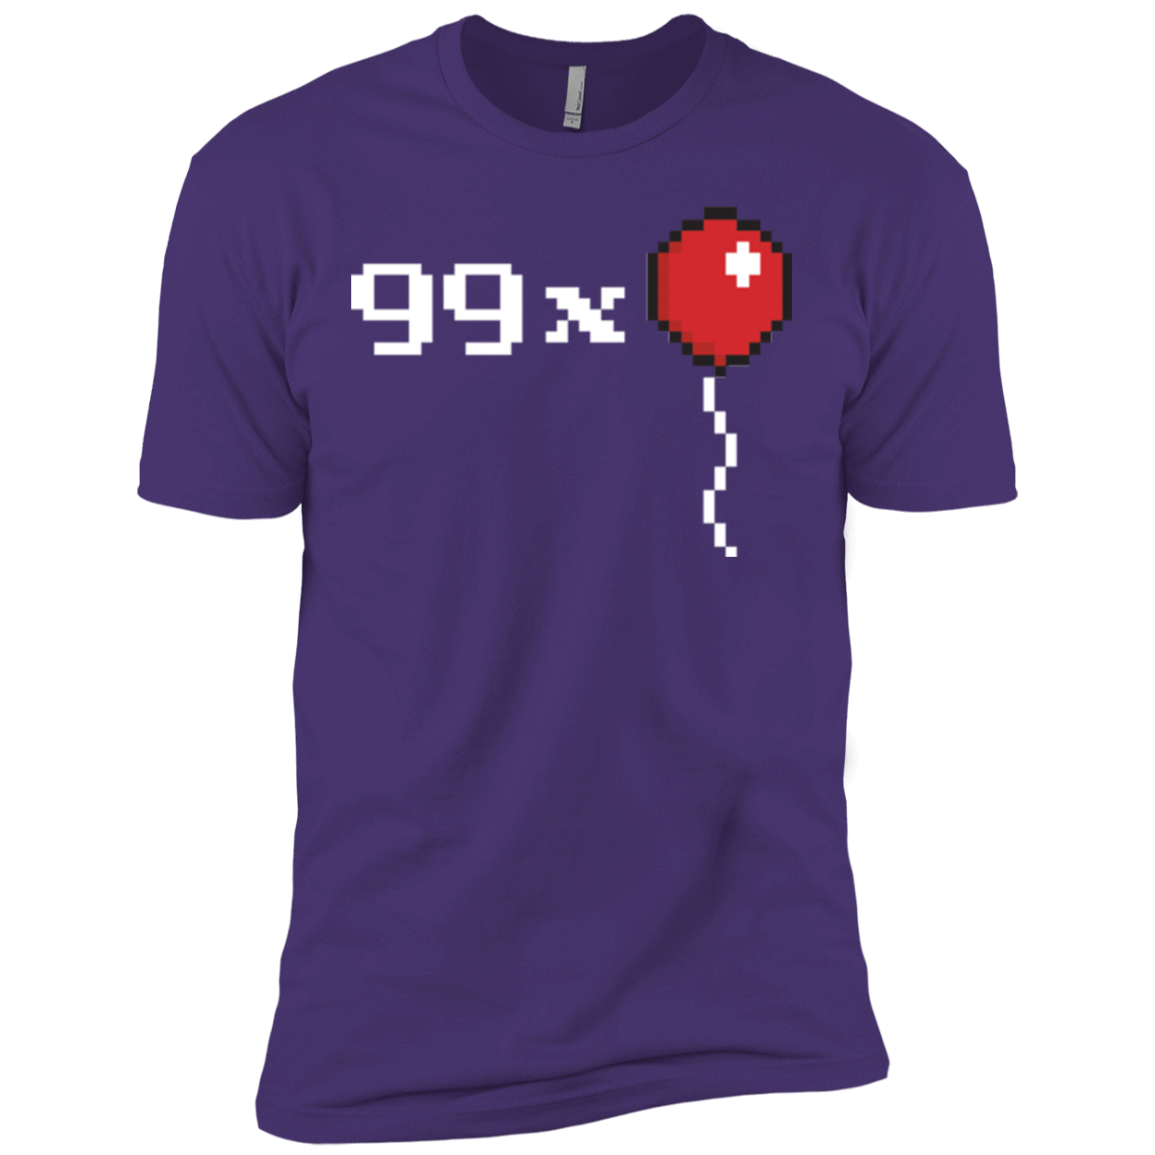 T-Shirts Purple / X-Small 99x Balloon Men's Premium T-Shirt